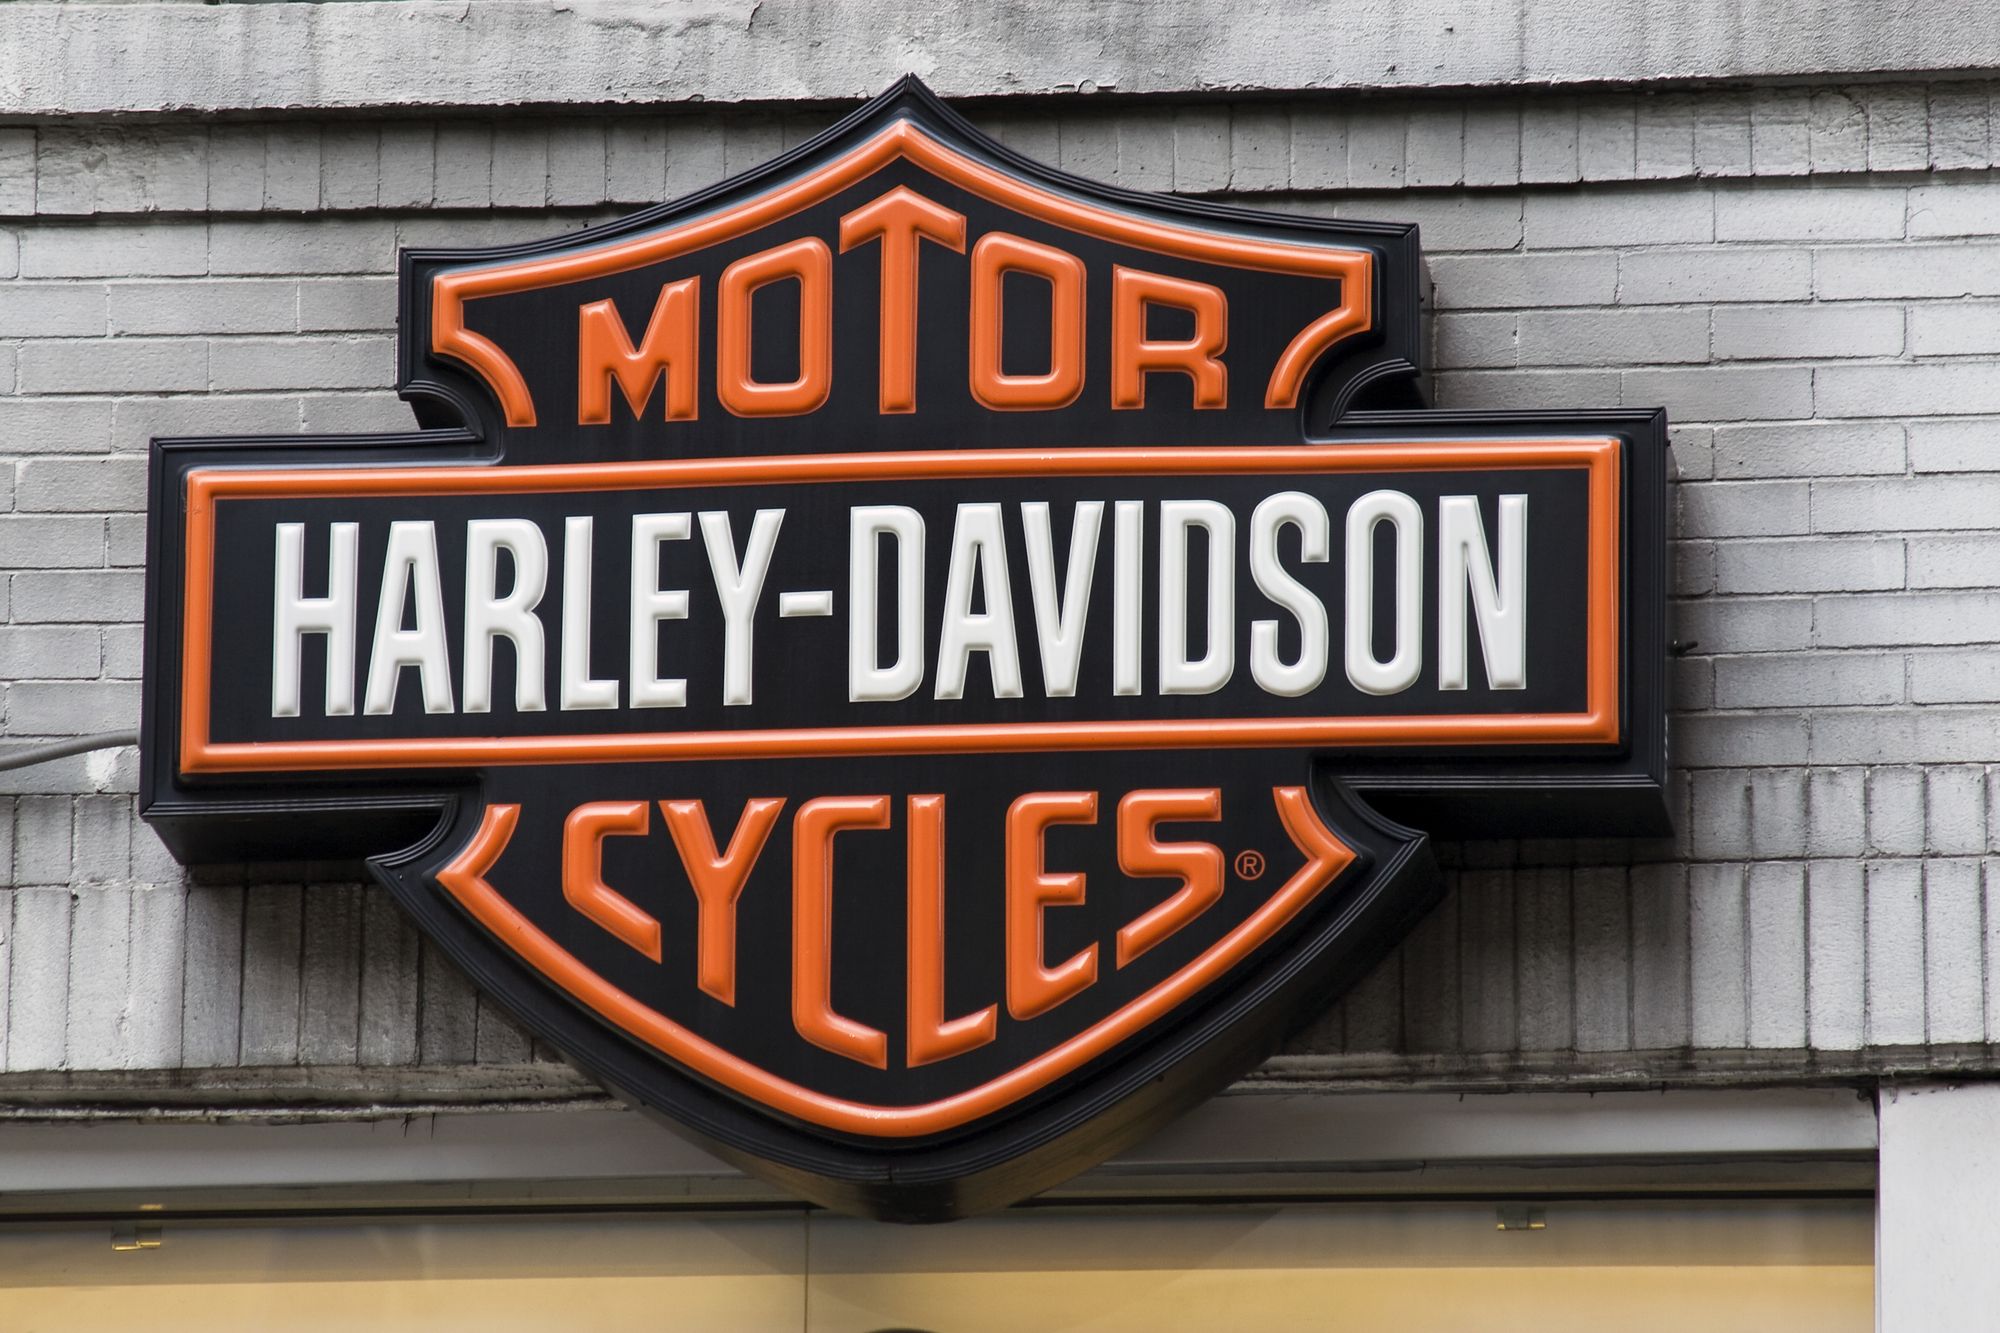 Harley Davidson logo